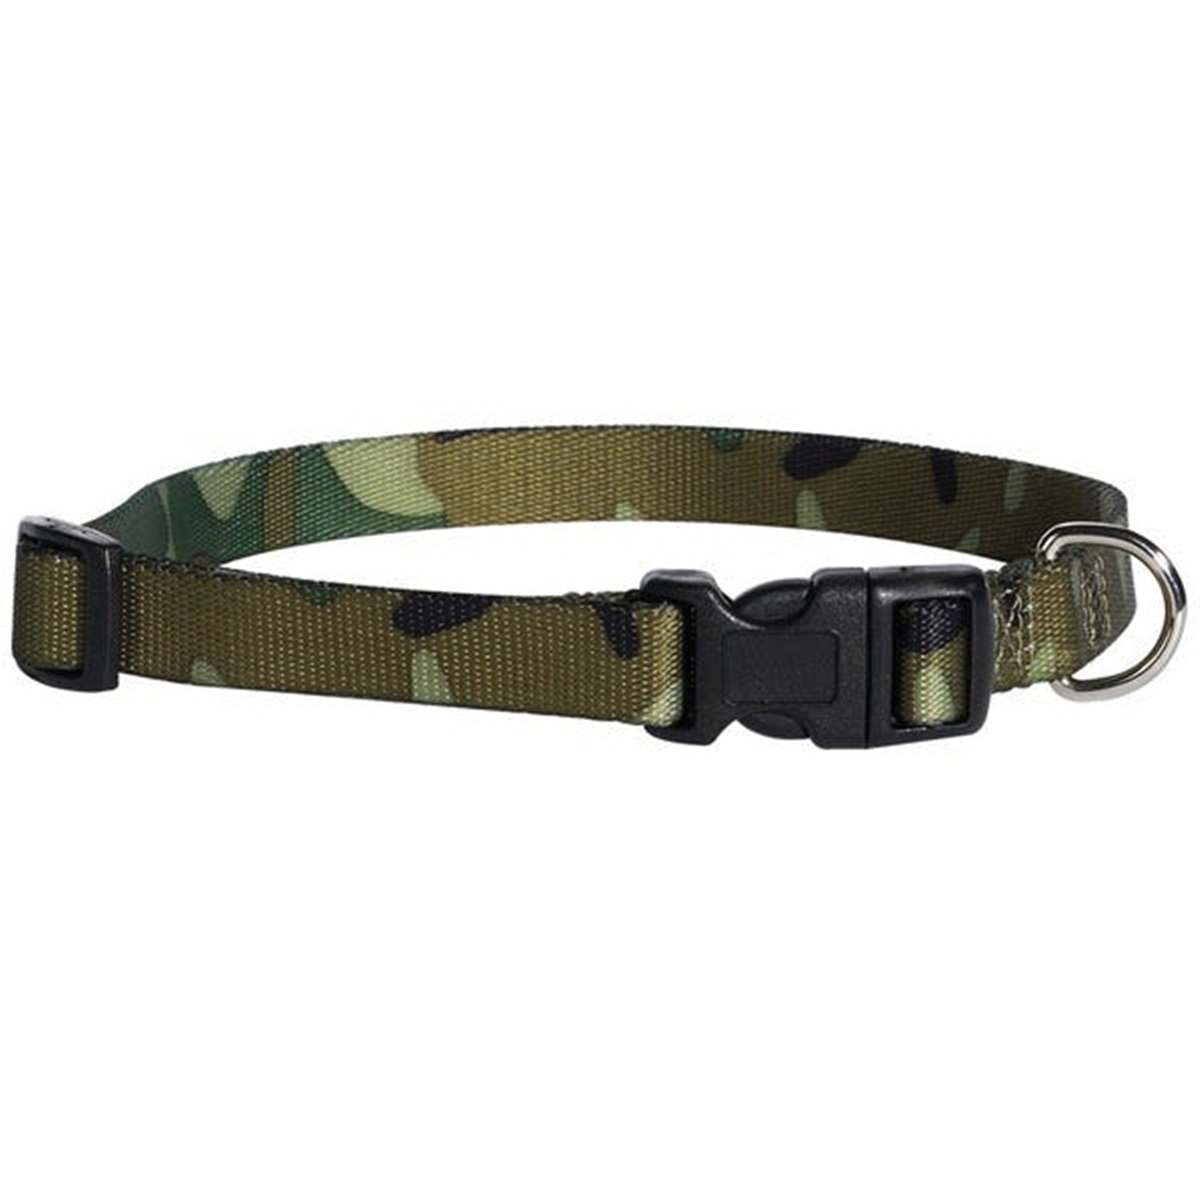 ZA6741 14 43 Dog Collar, D-Ring Link, 14 to 20 in L, 5/8 in W, Nylon, Green Camo